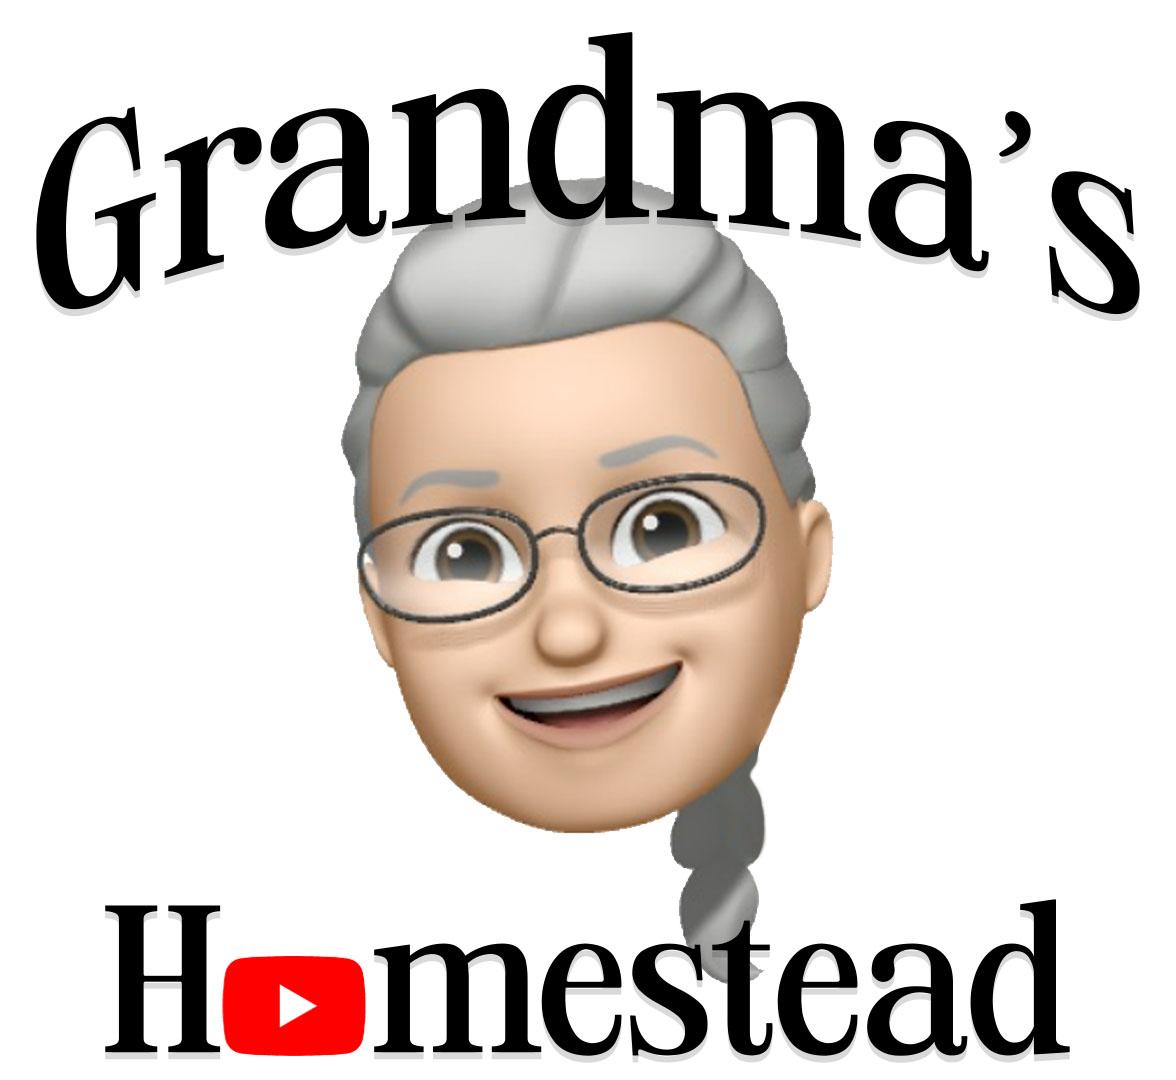 Grandma's Homestead